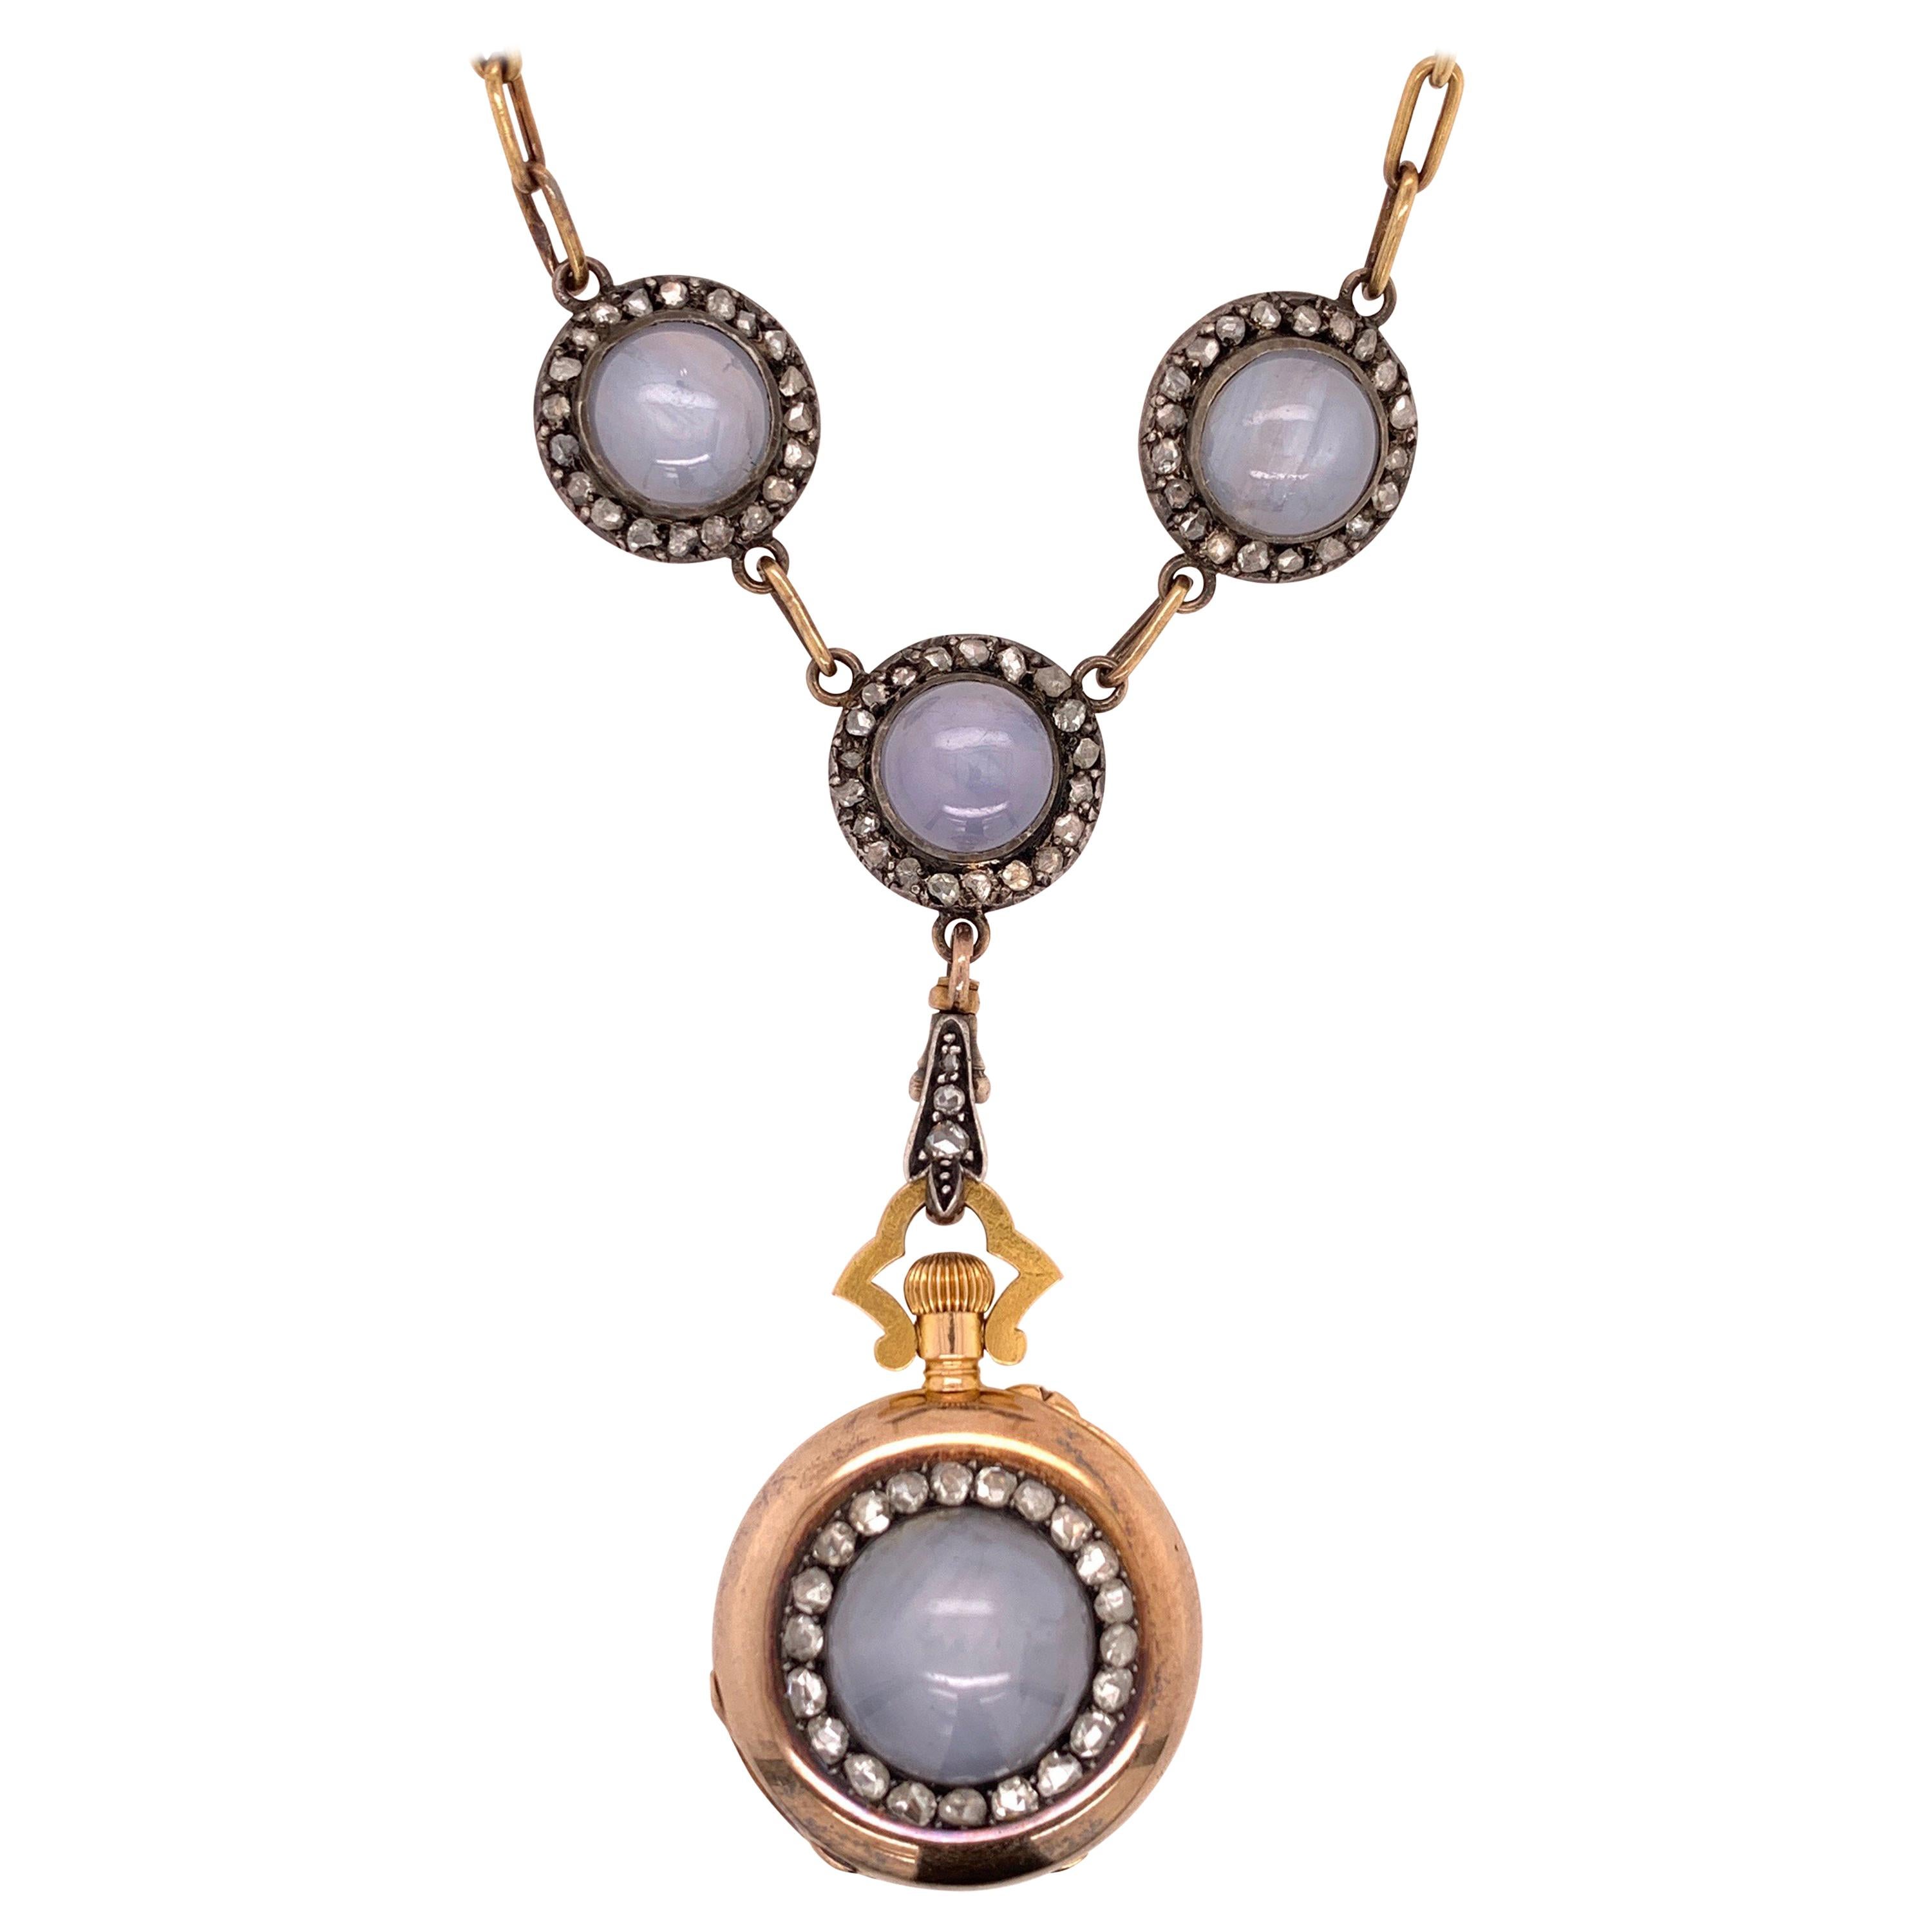 Original Boucheron Star Sapphire and Diamond Gold Necklace circa 1900 with Clock For Sale